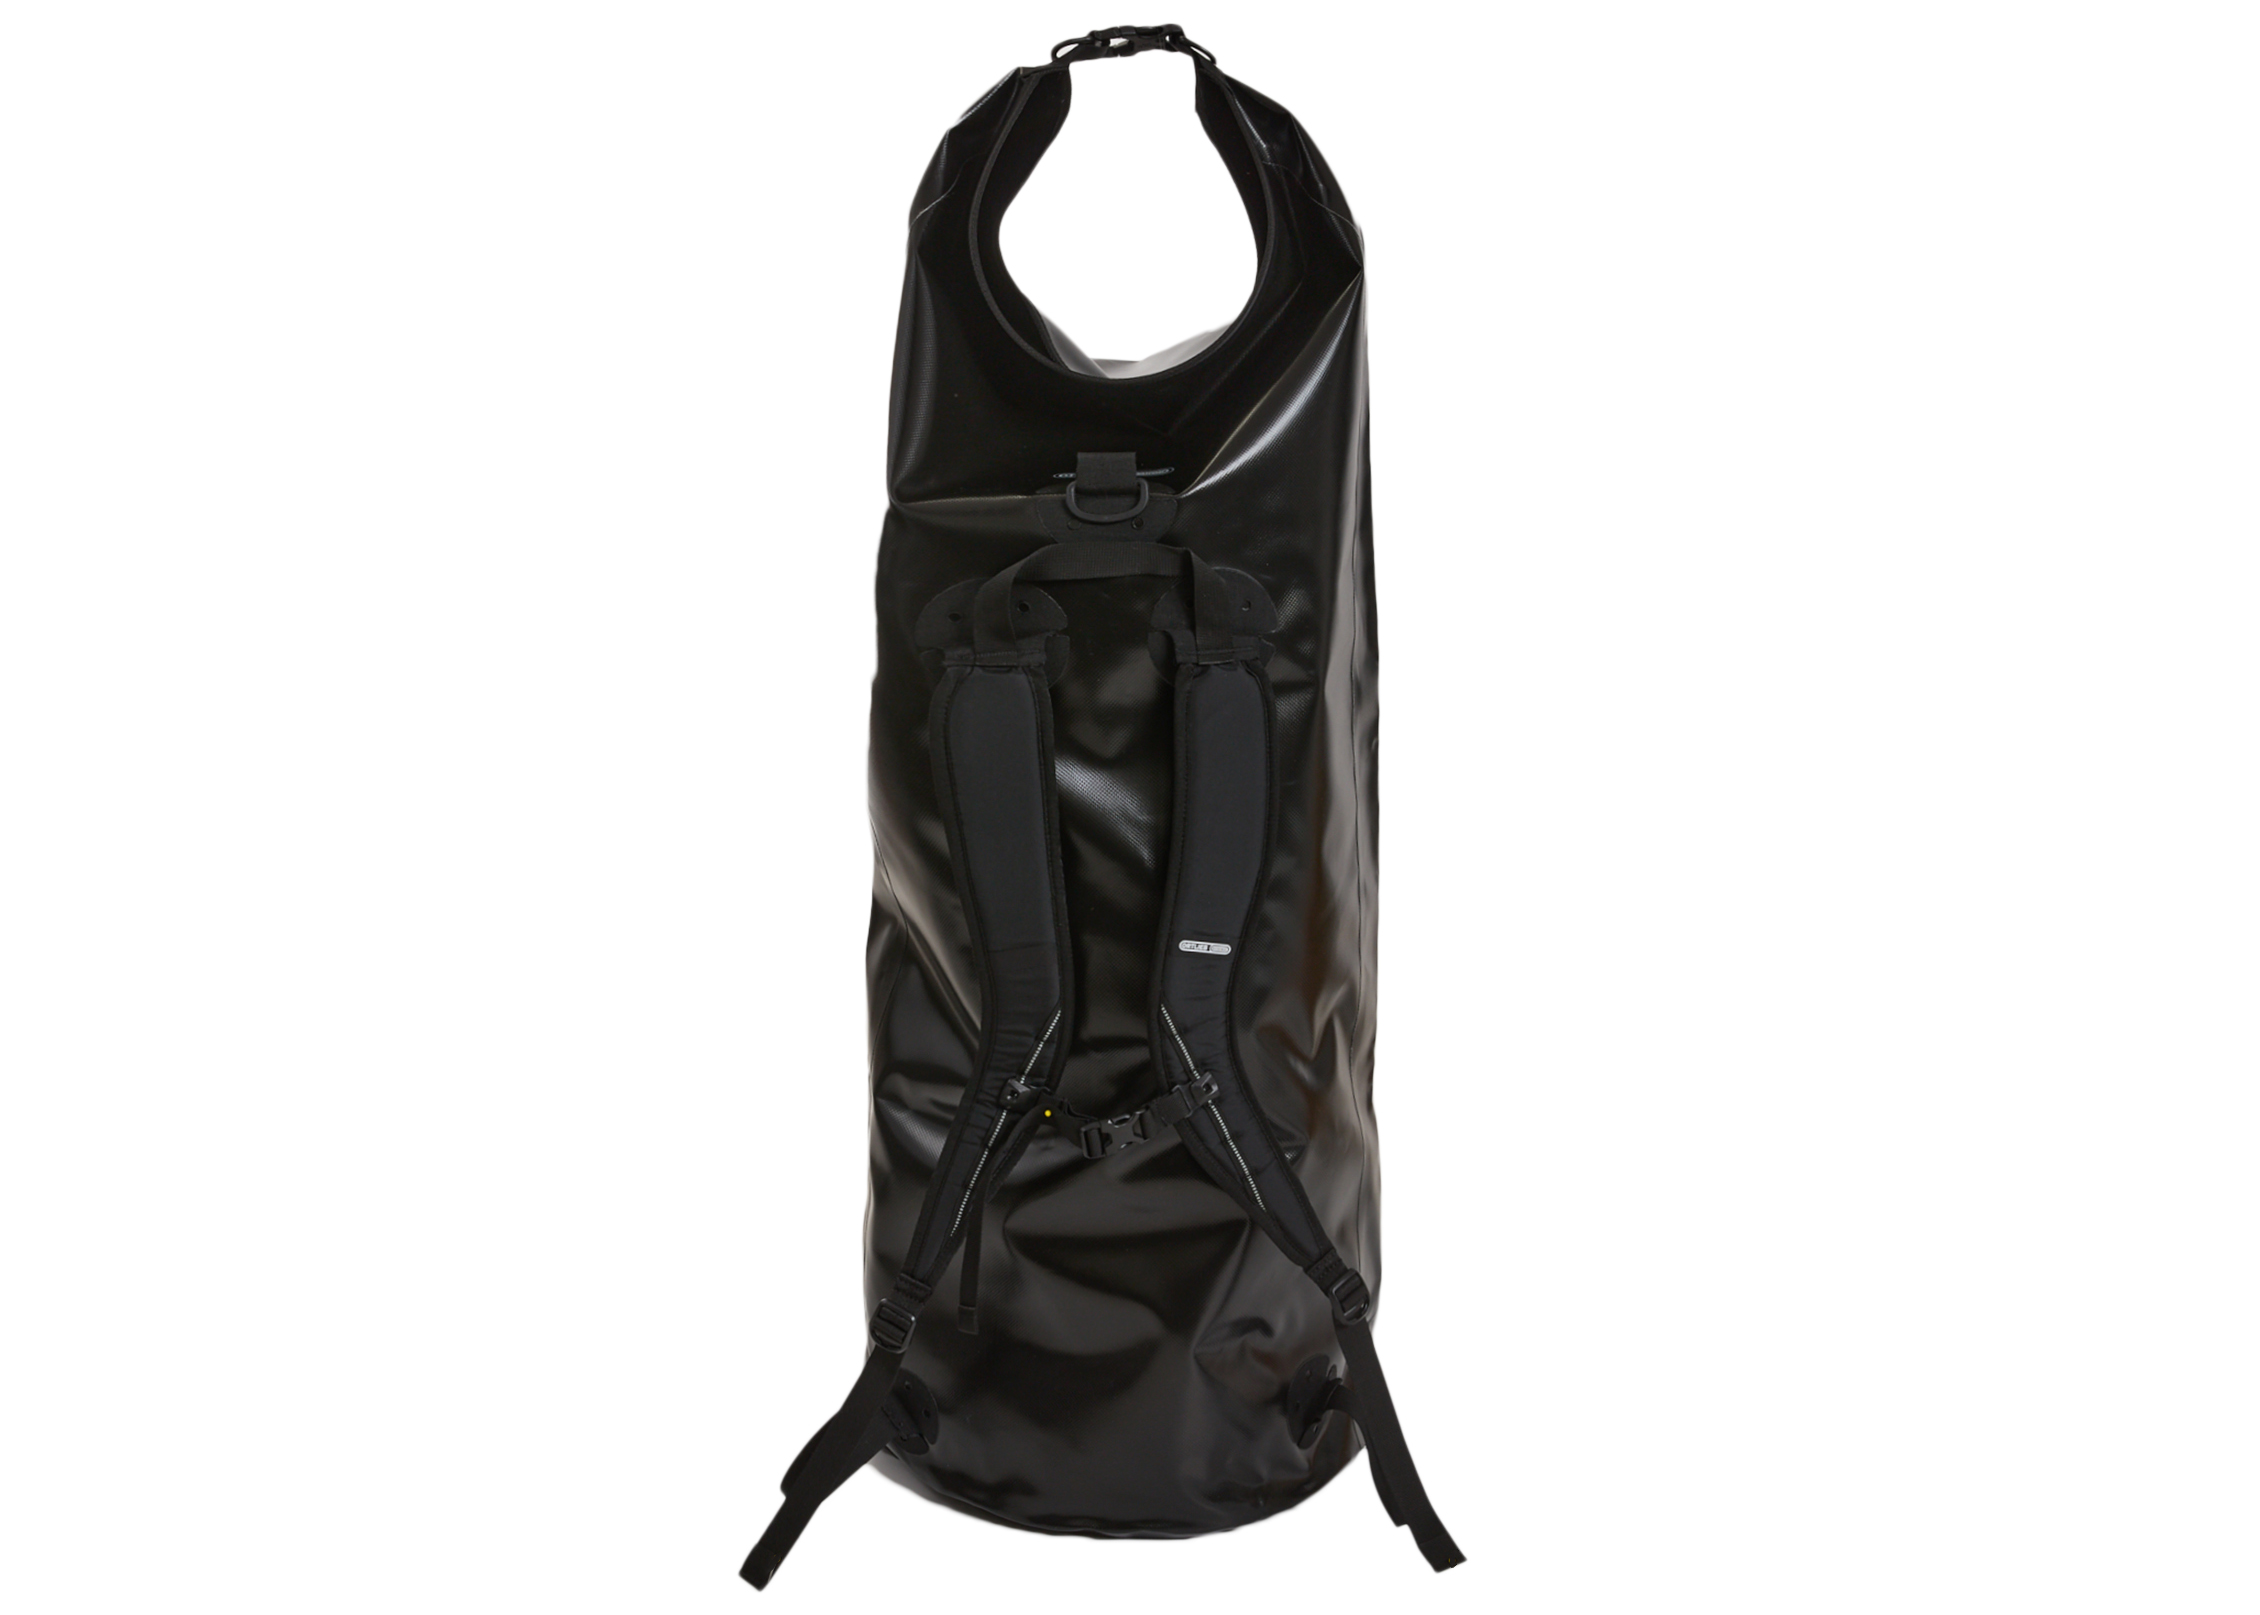 Supreme Ortlieb Large Rolltop Backpack Black